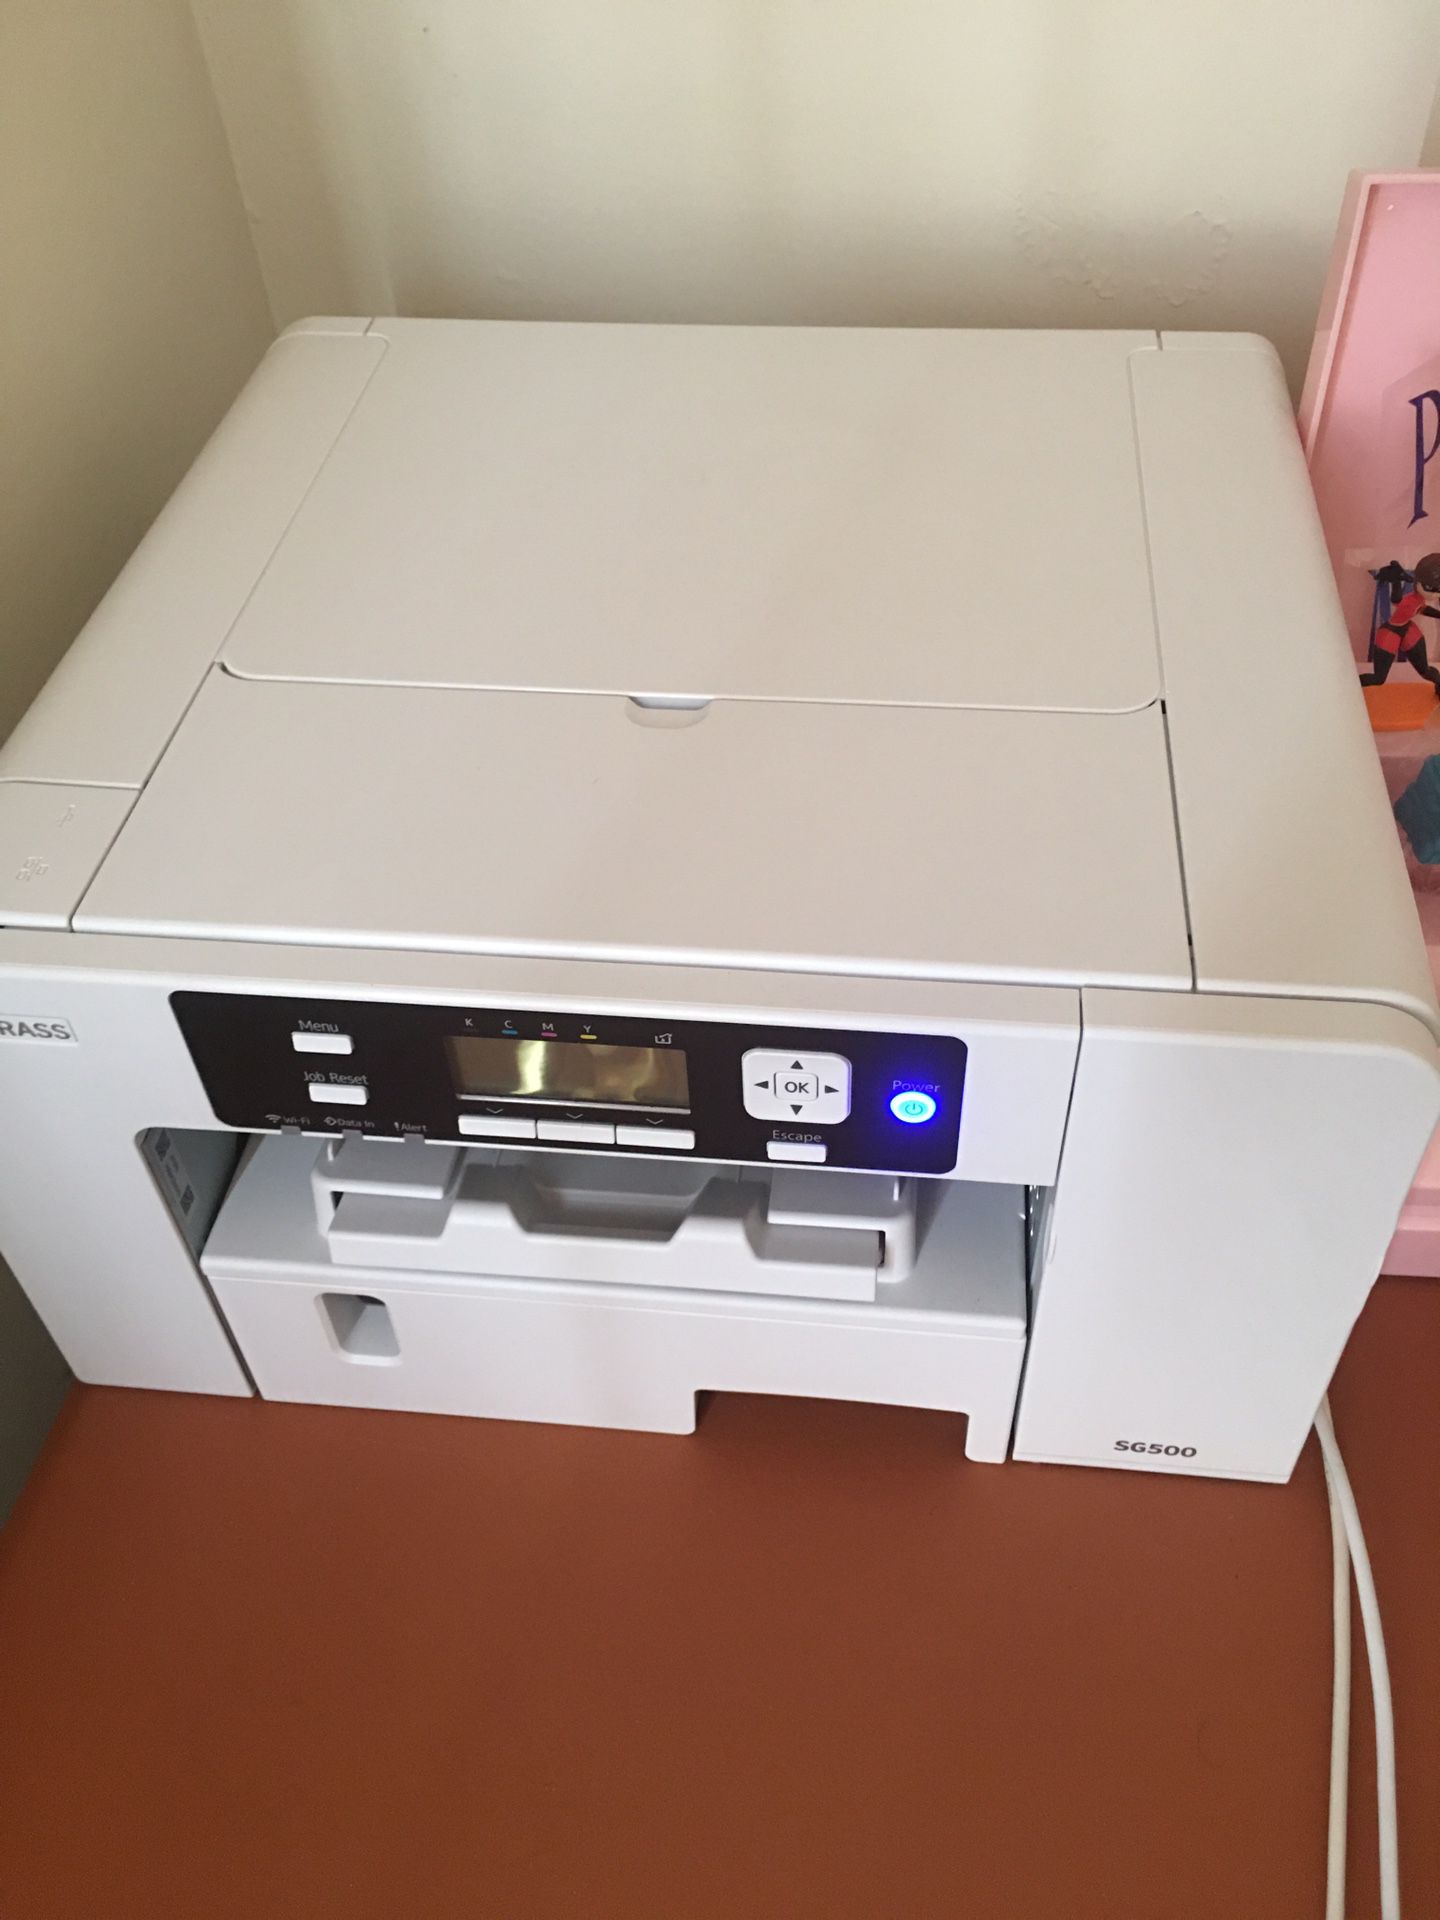 Sawgrass sg500 Sublimation printer